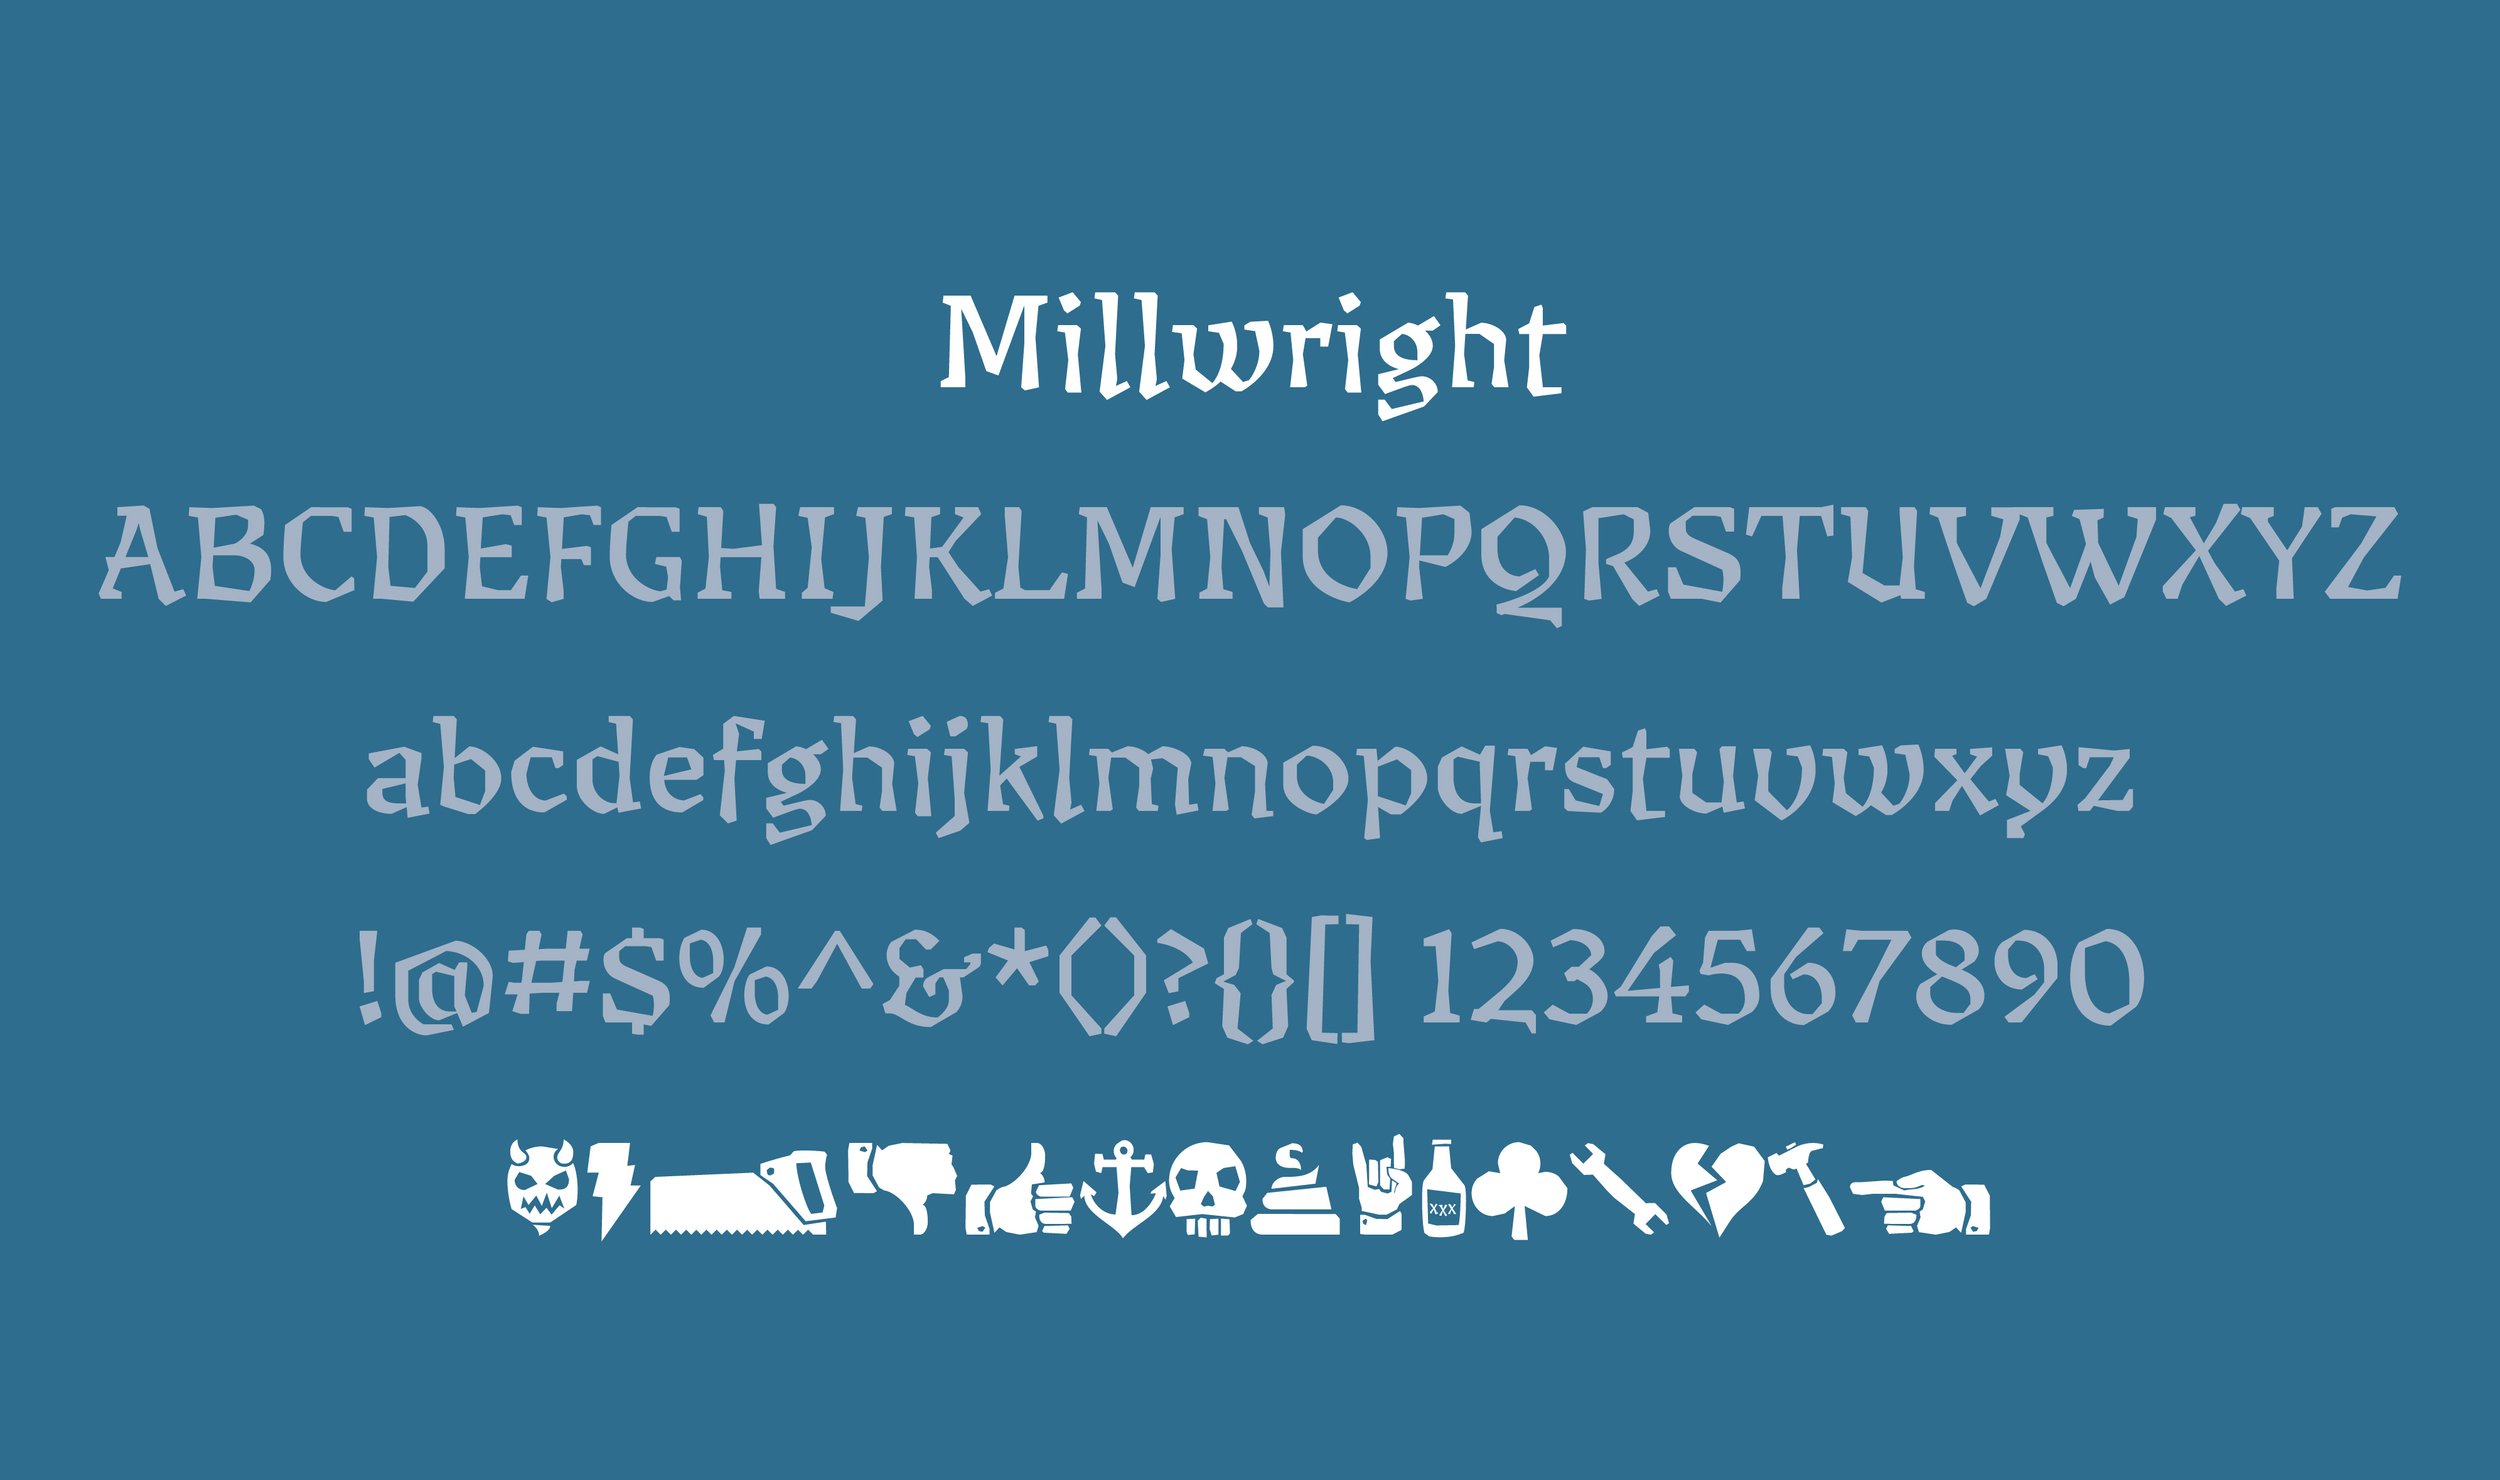 Millwright_Artboard 2.jpg